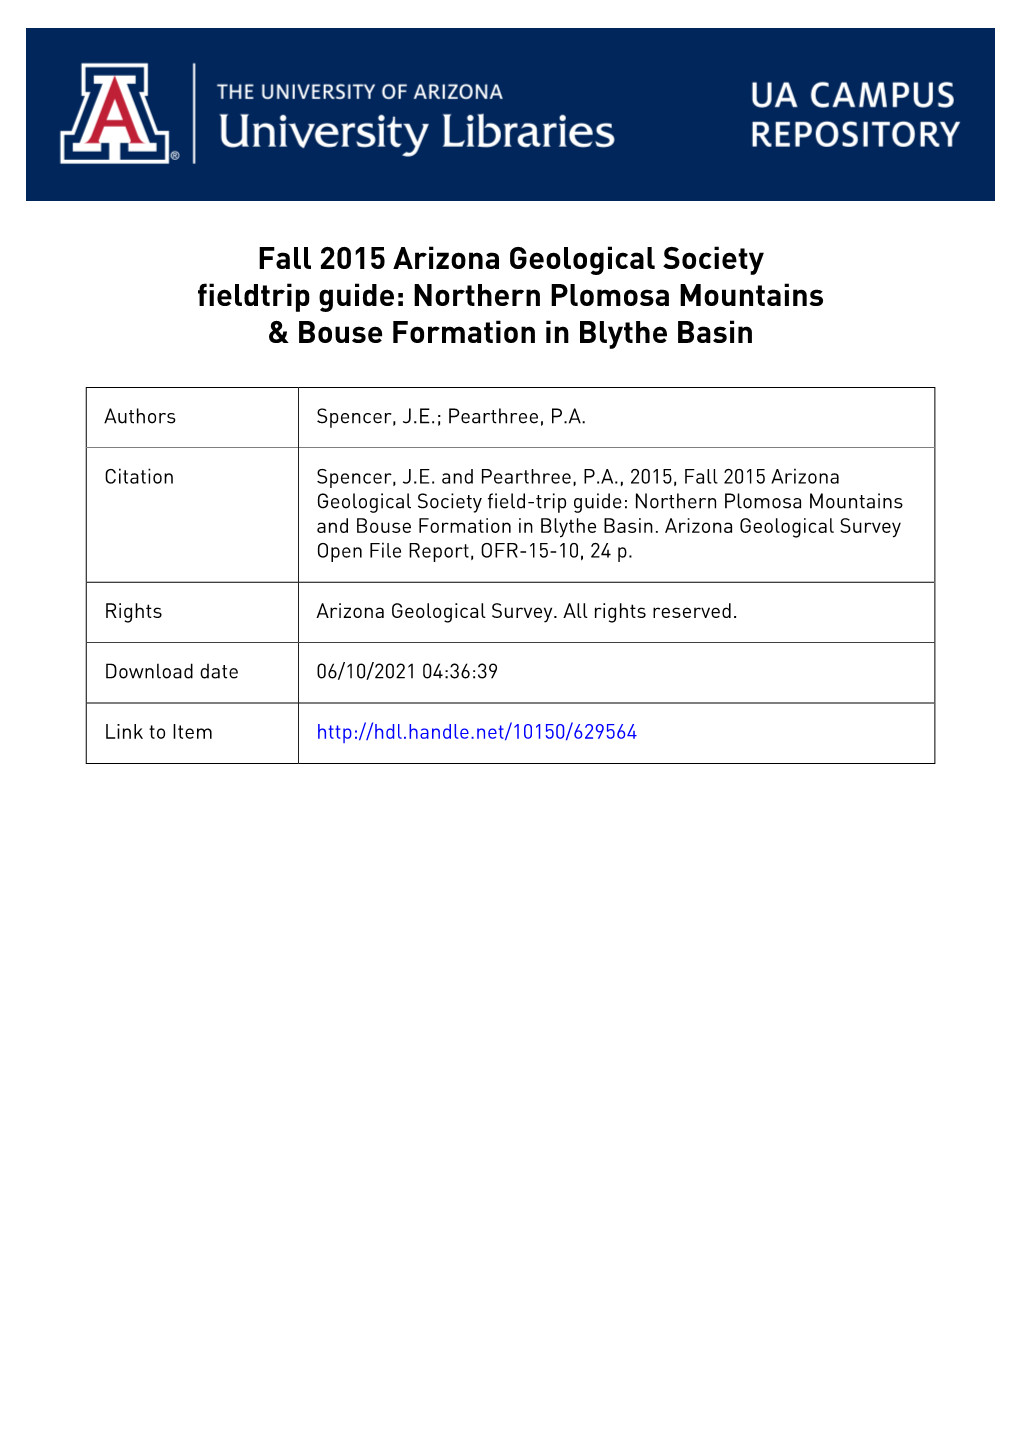 Arizona Geological Survey Open File Report, OFR-15-10, 24 P